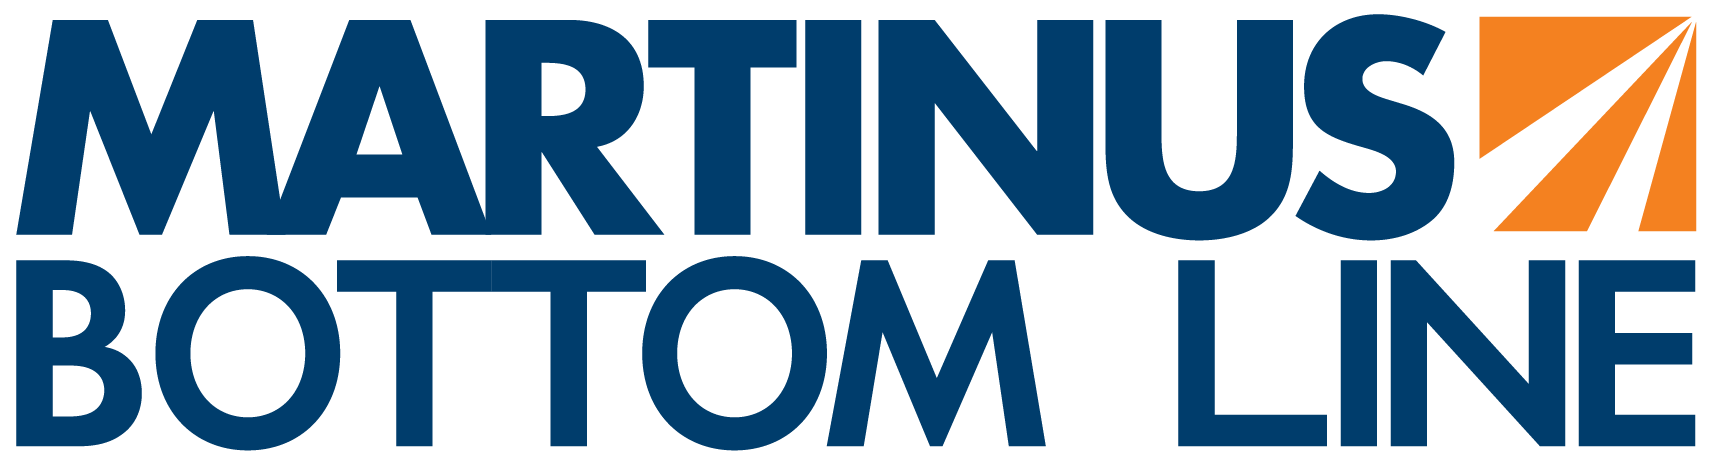 Martinus Bottom Line_RGB_PRIMARY.png